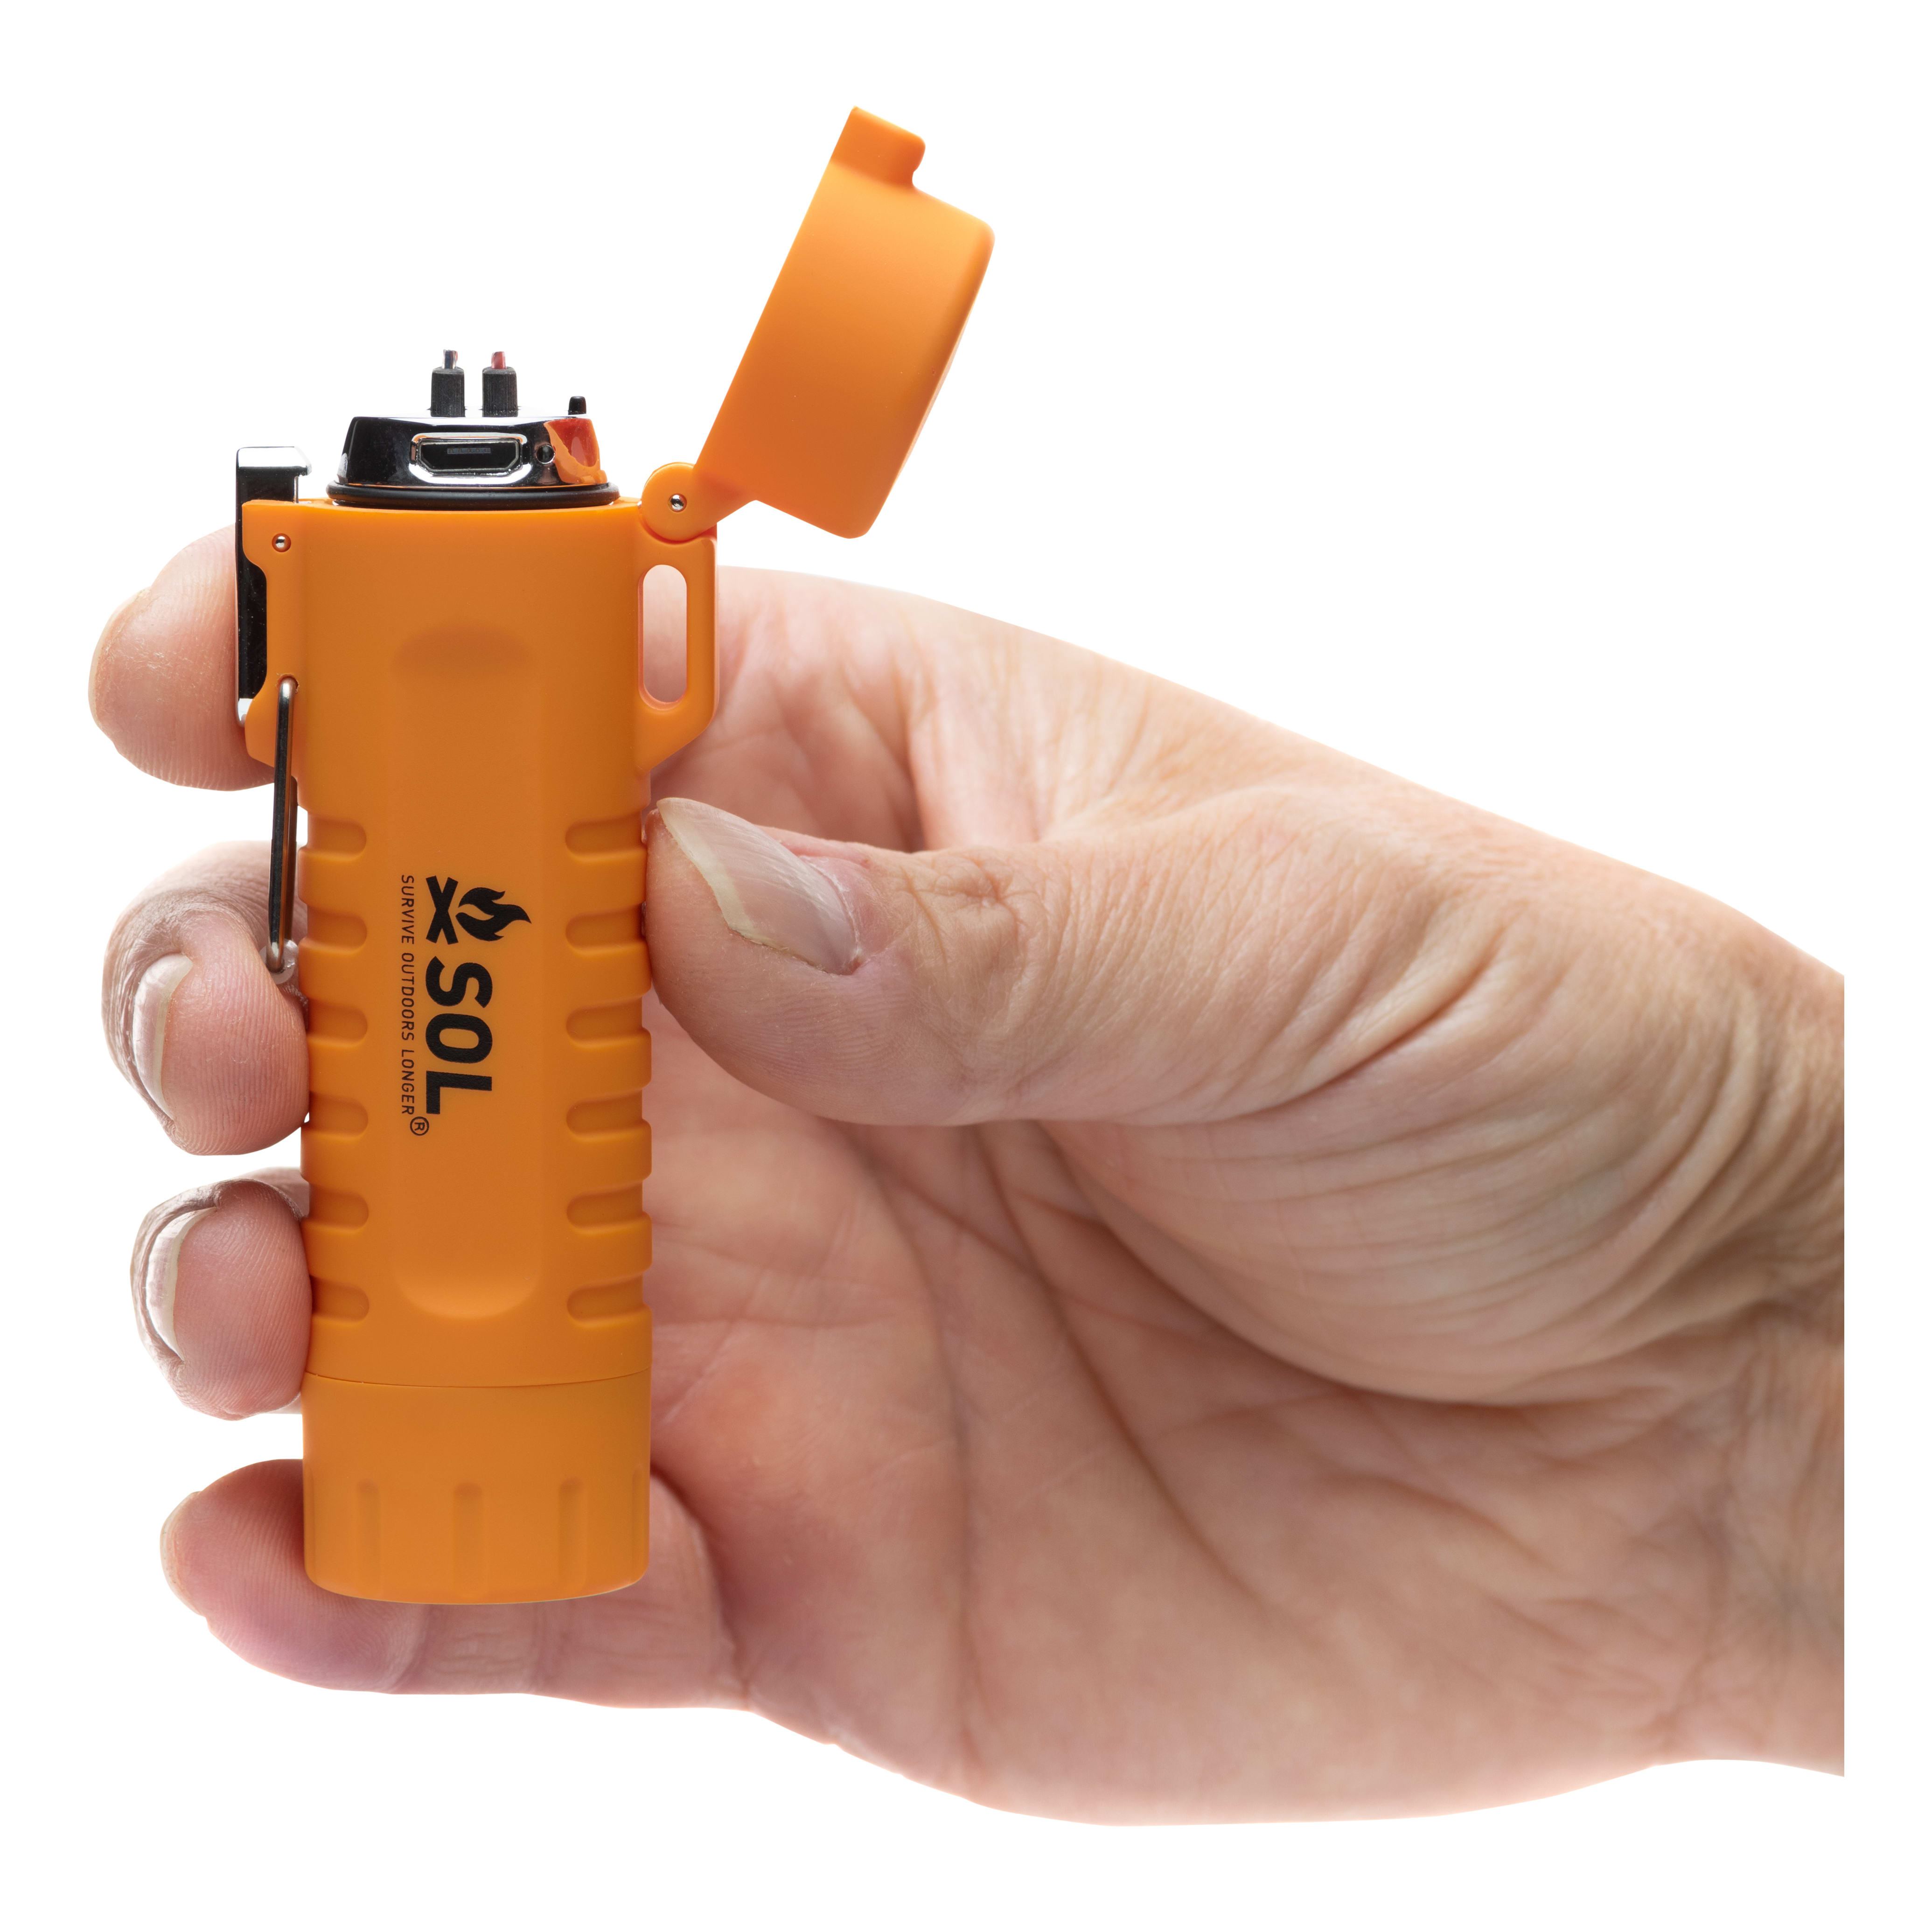 S.O.L.® Fire Lite™ Fuel-Free Lighter